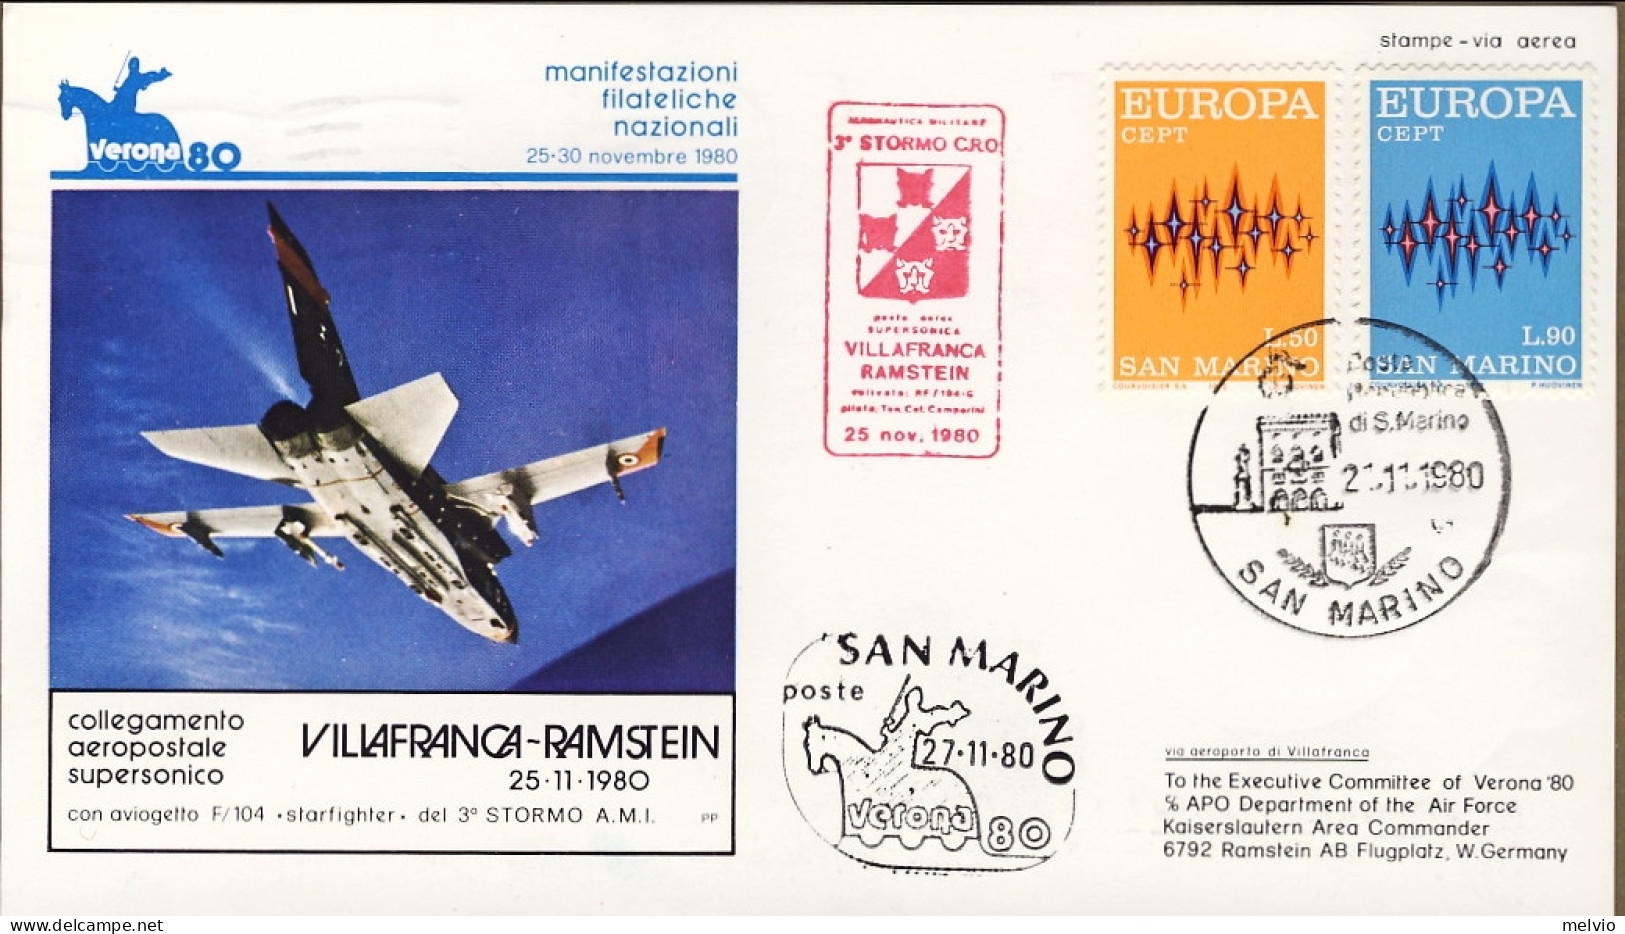 San Marino-1980 Cartolina Illustrata Manifestazioni Filateliche Nazionali Verona - Luftpost